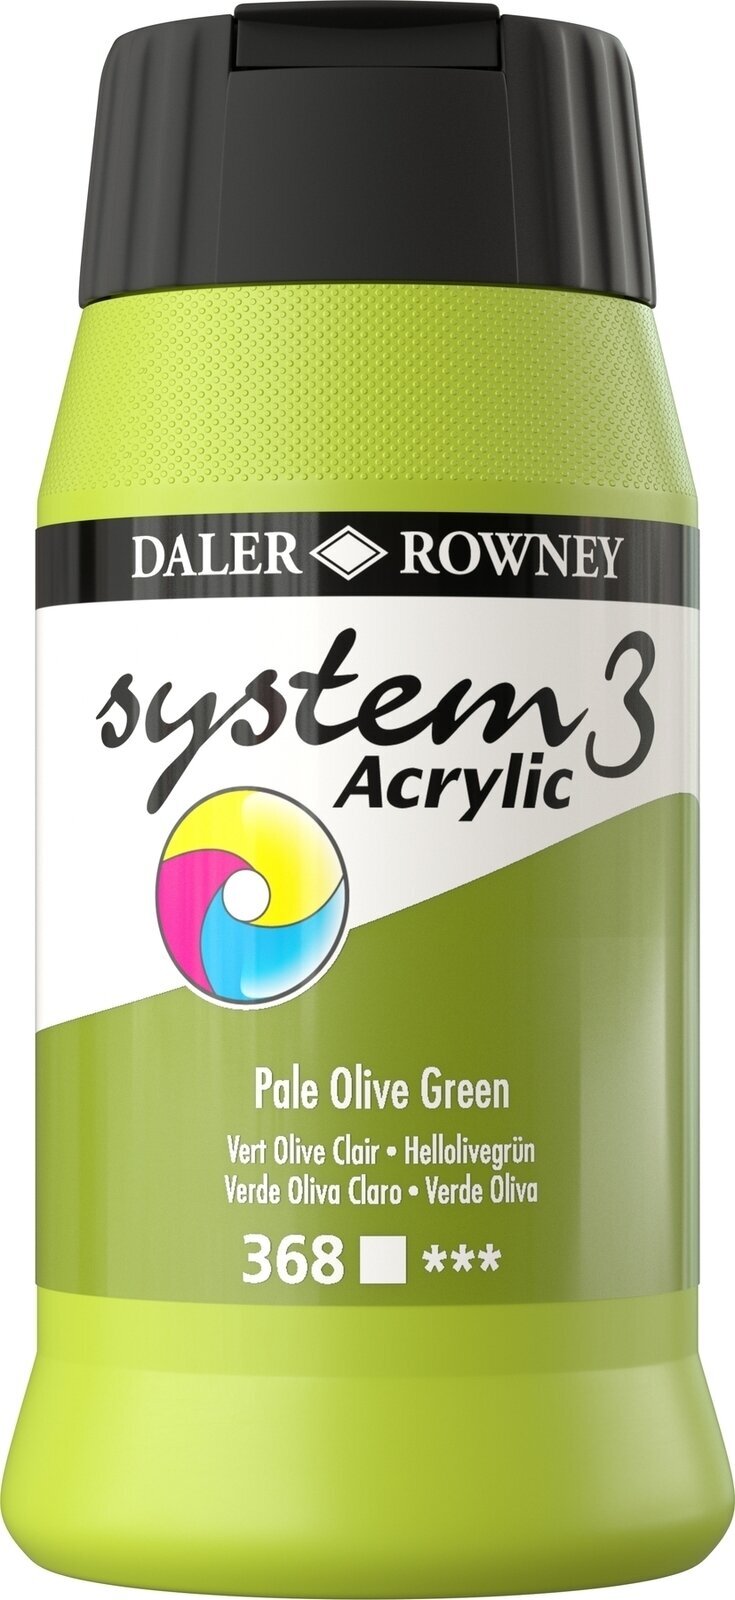 Akrylmaling Daler Rowney System3 Akrylmaling Pale Olive Green 500 ml 1 stk.